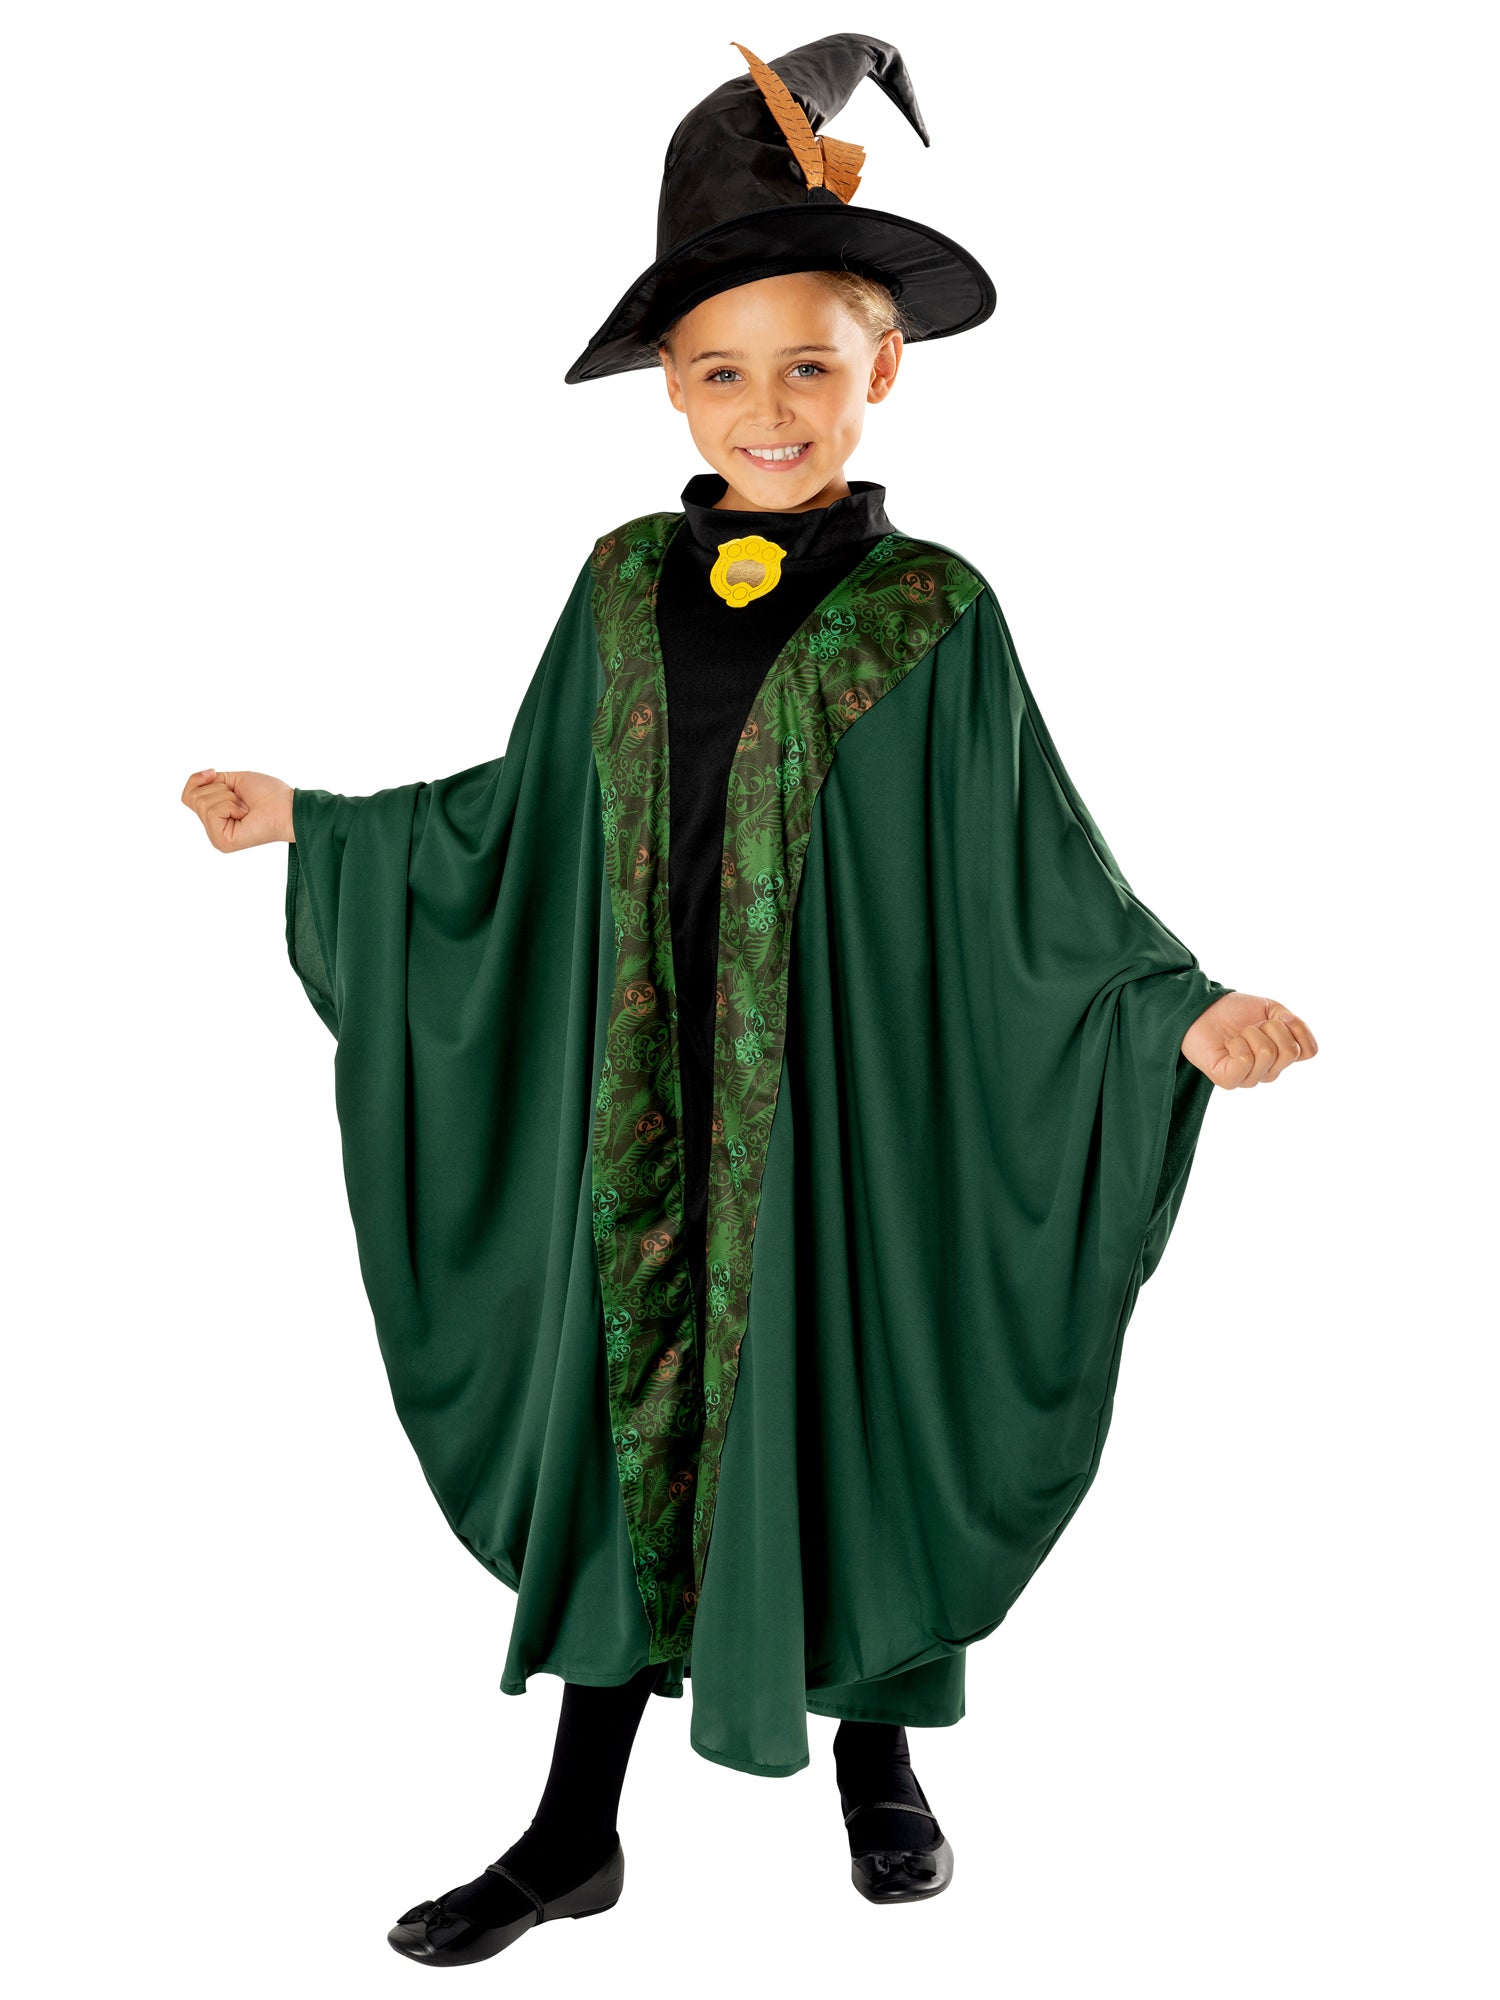 Professor Mcgonagall Robe Costume for children